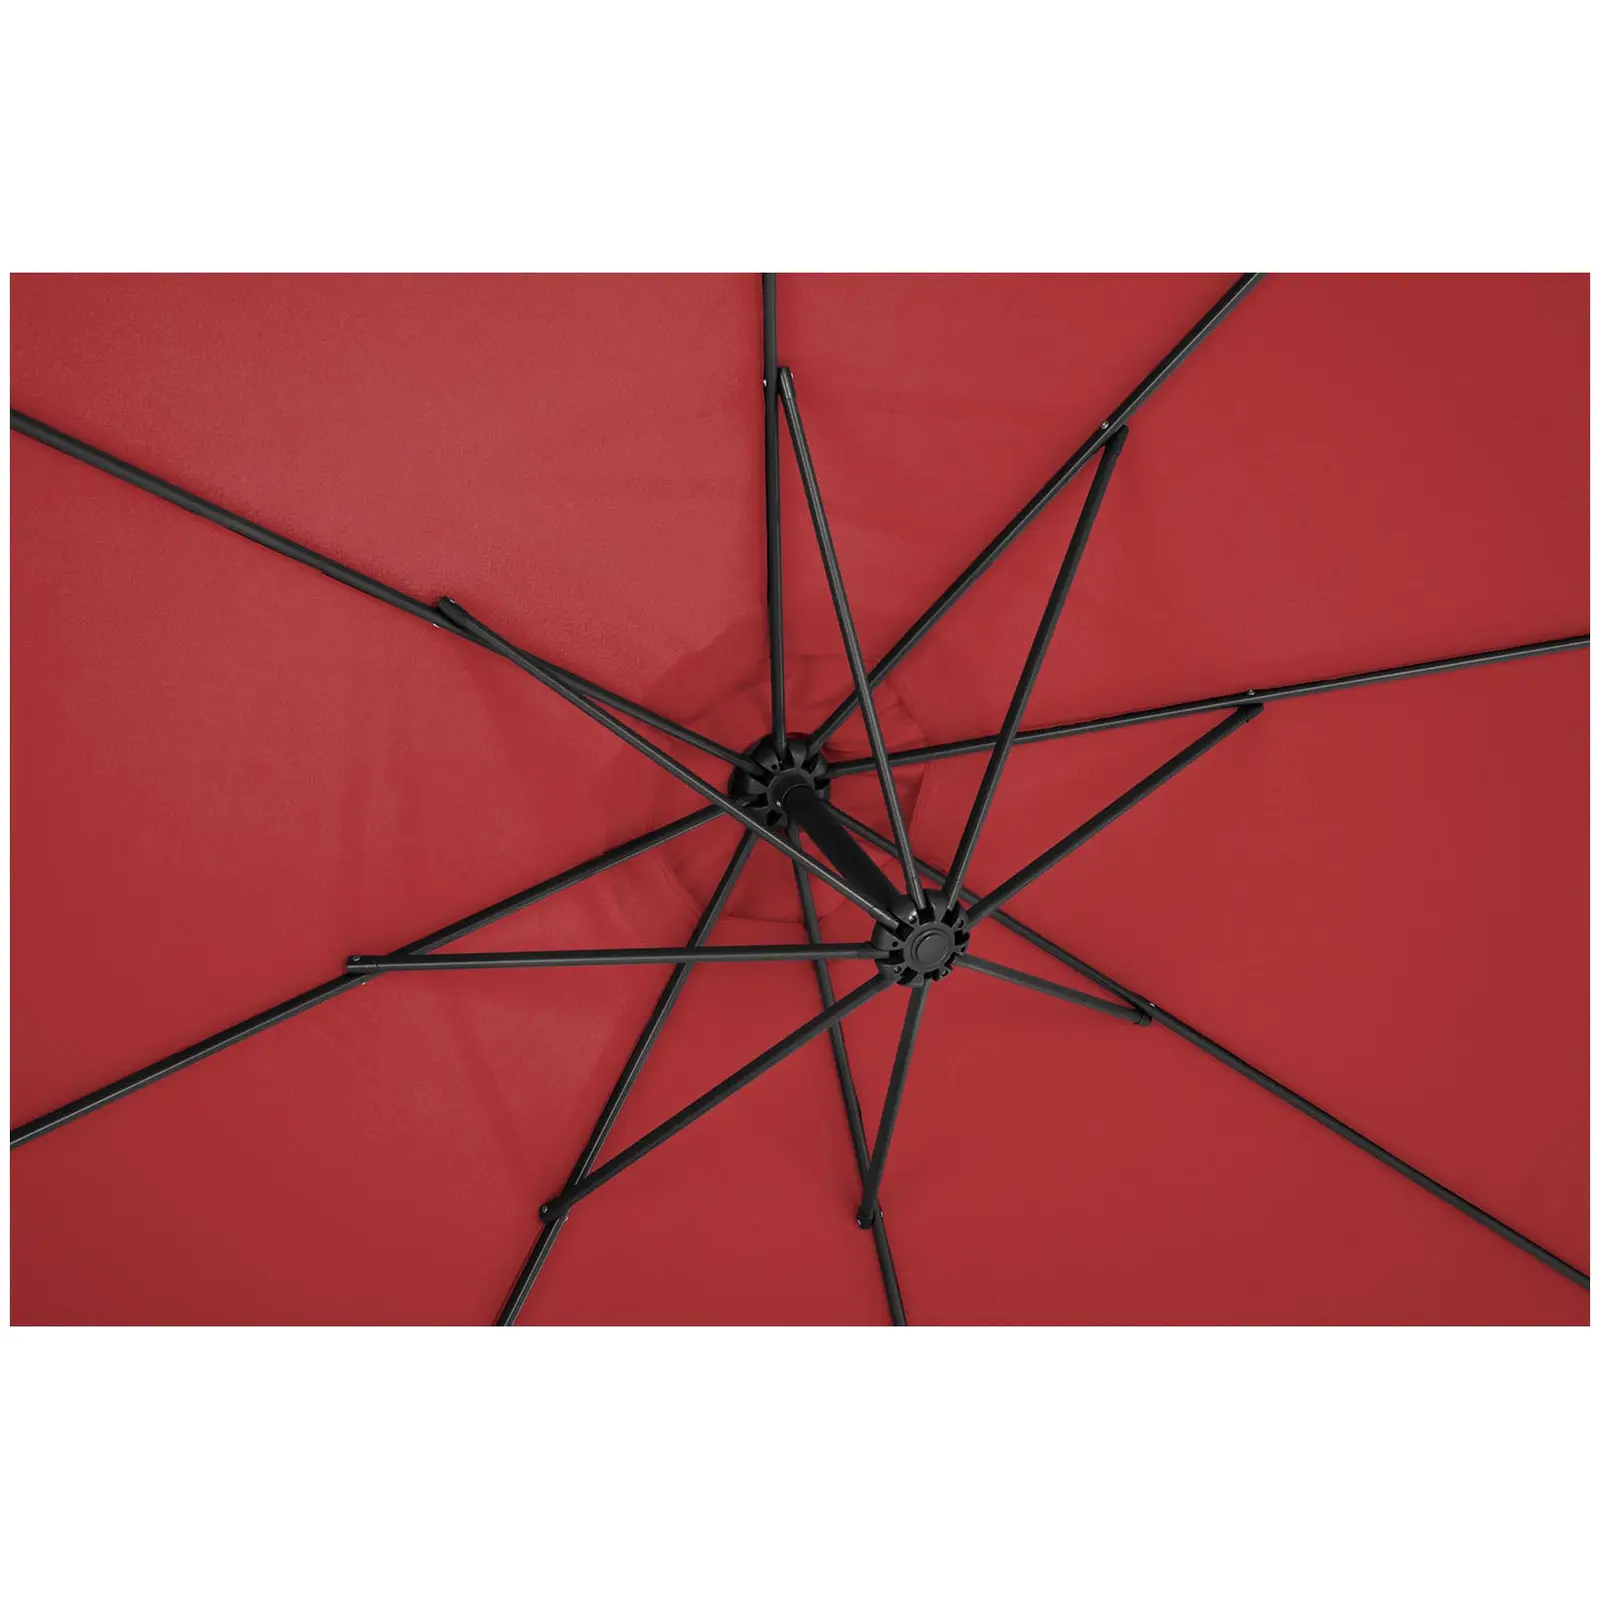 Hængeparasol - bordeaux - rund - 300 cm i diameter